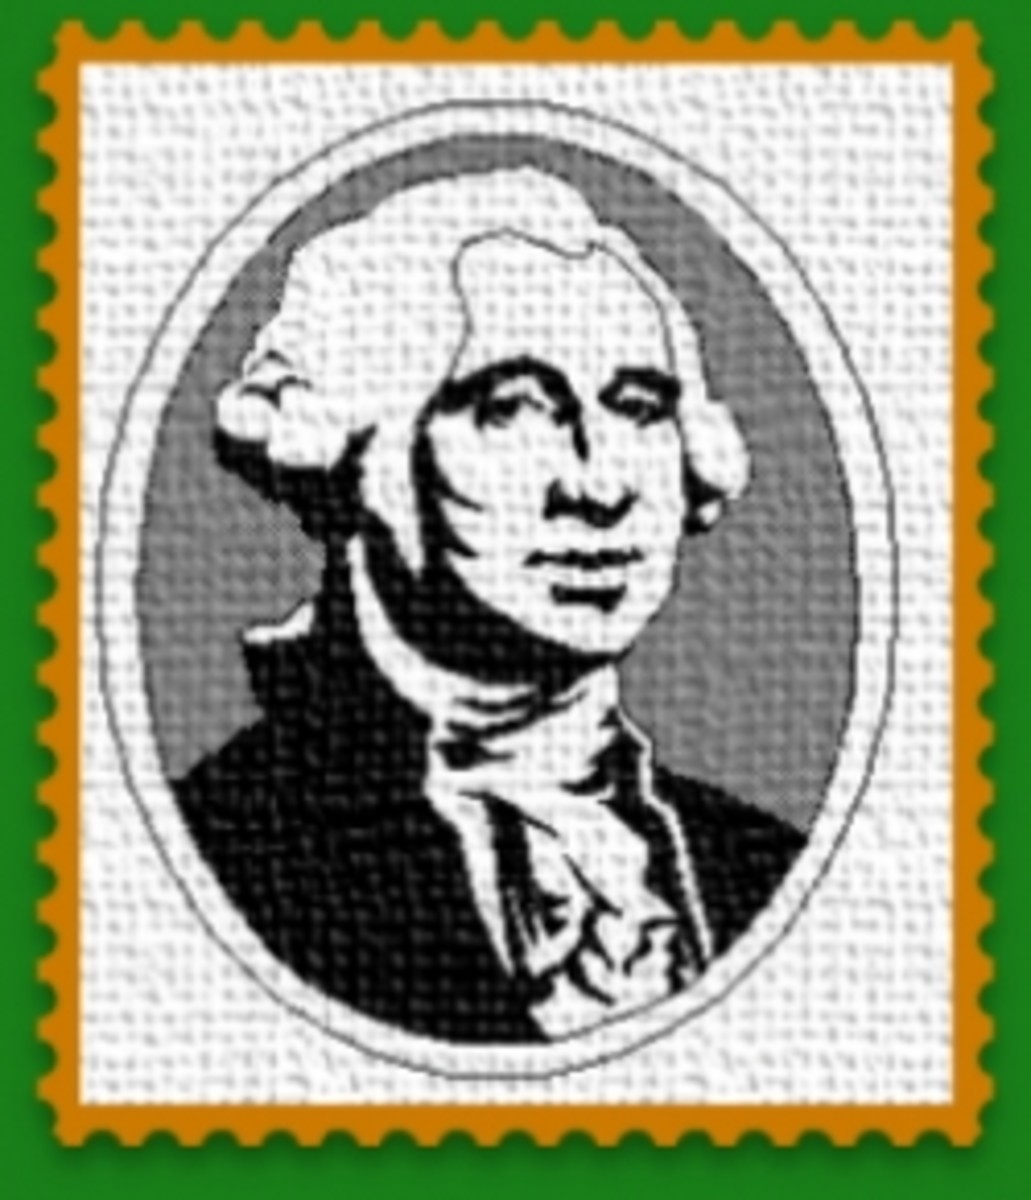 Fun Facts About George Washington